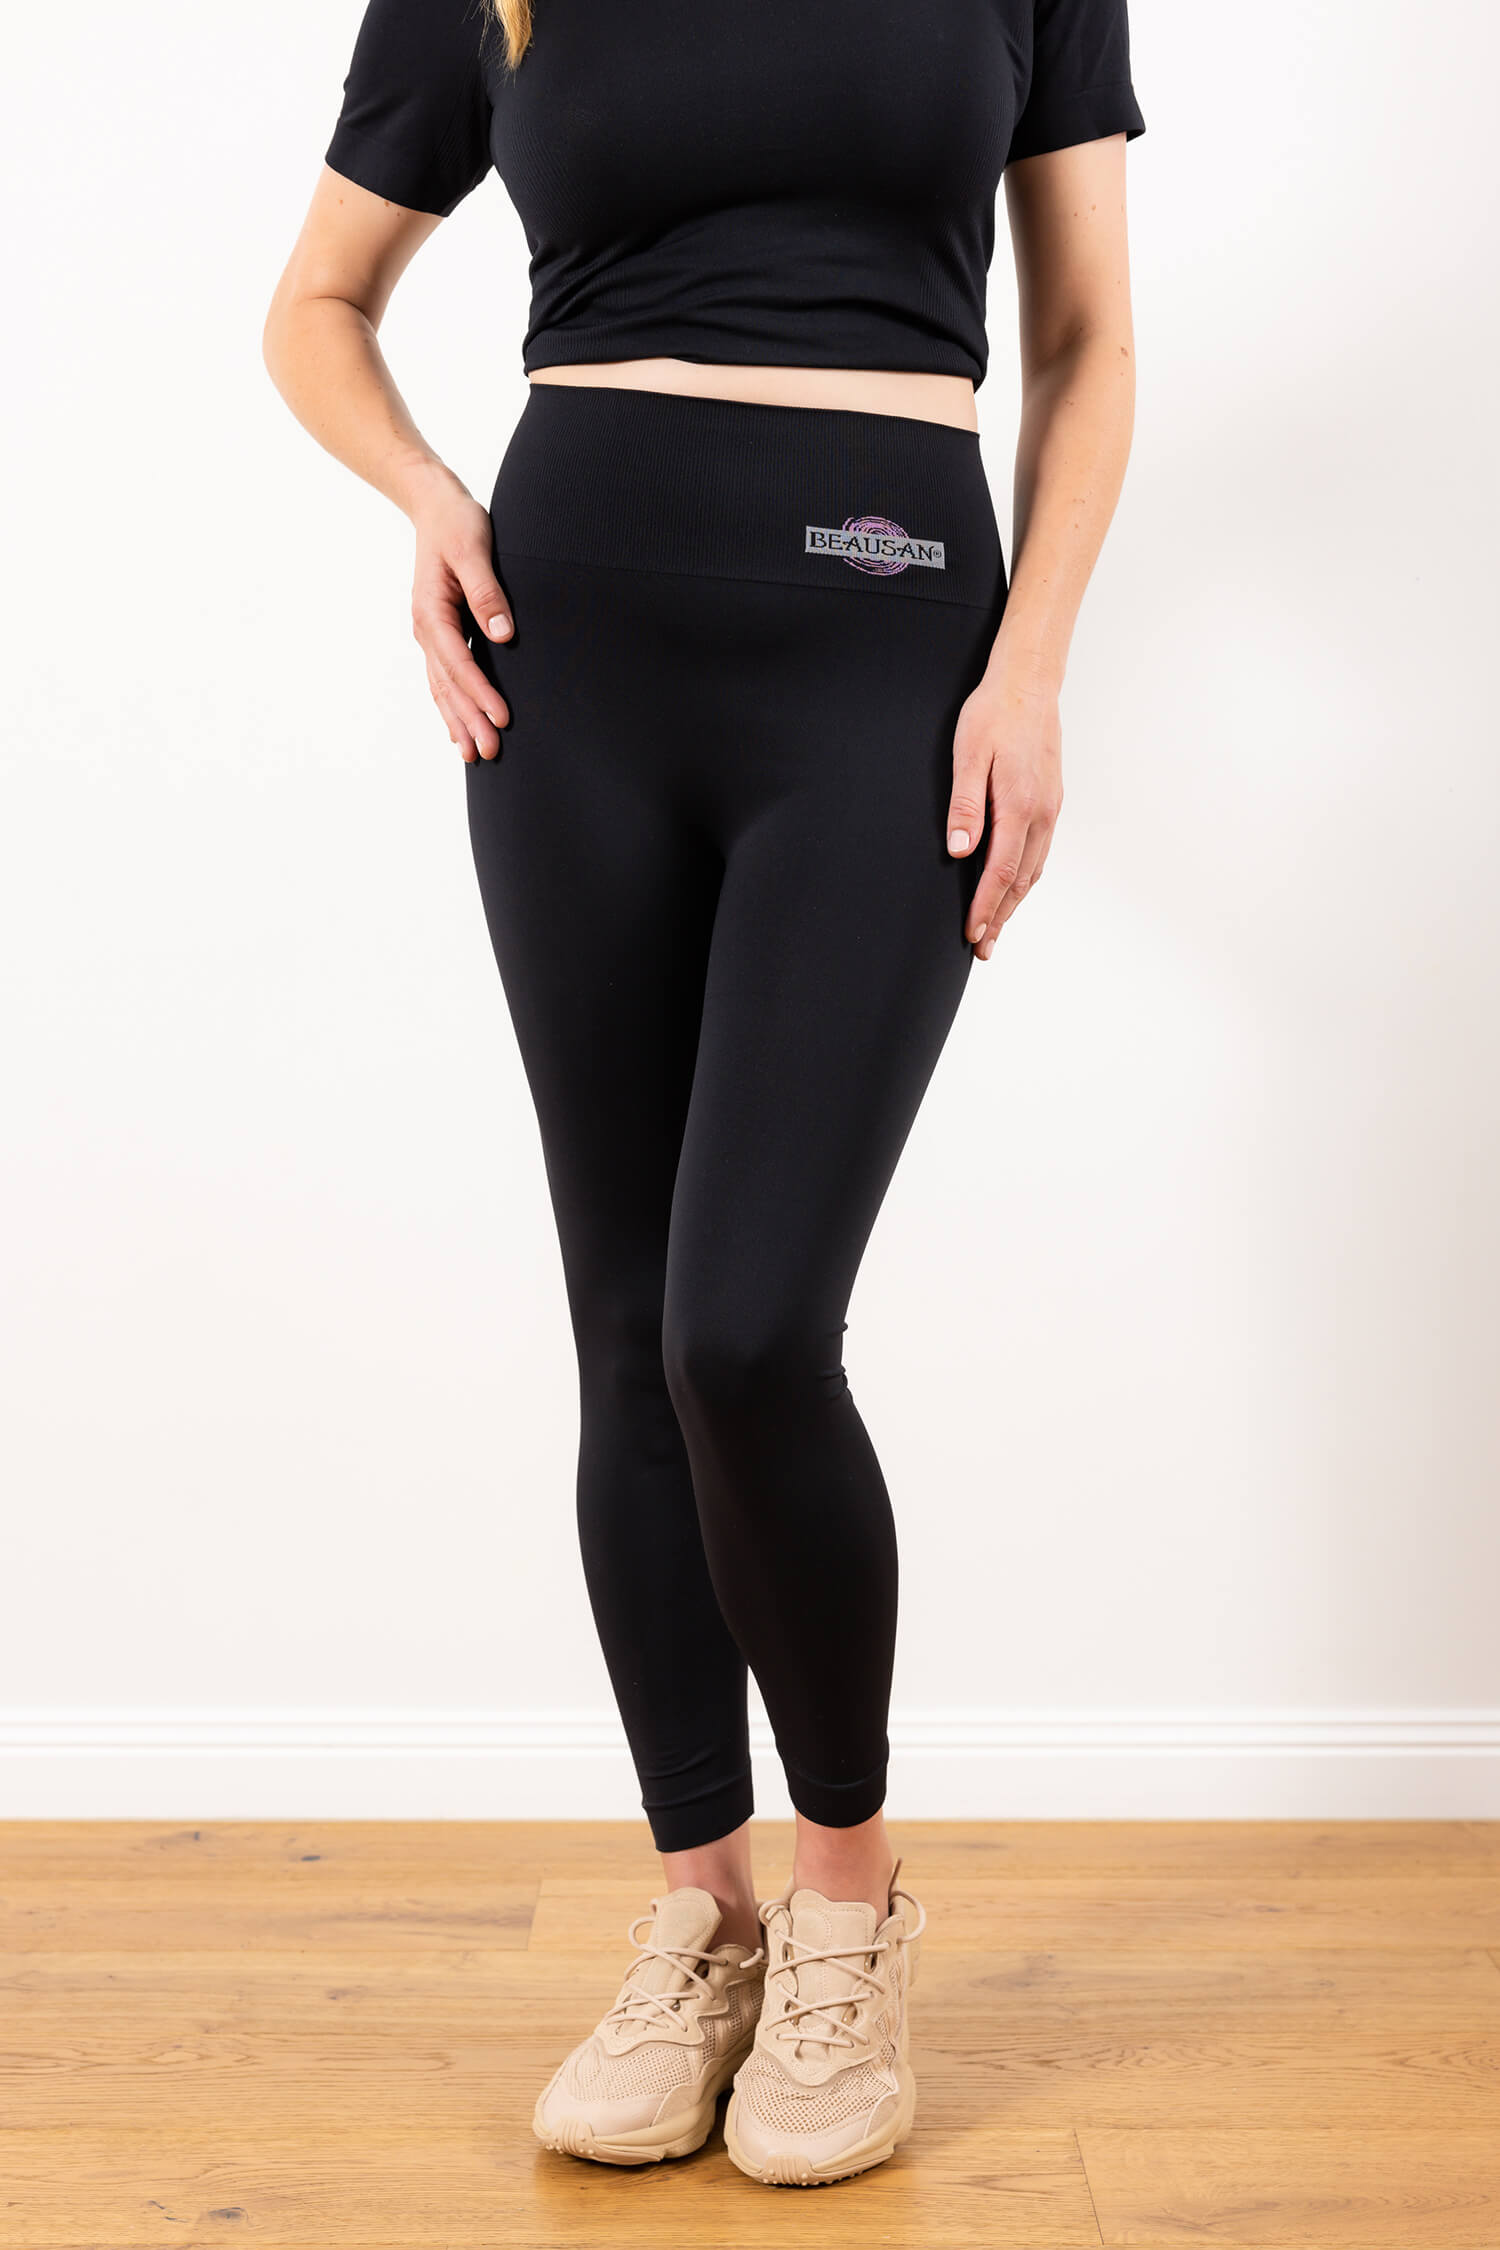 best leggings for cellulite smoothing｜TikTok Search